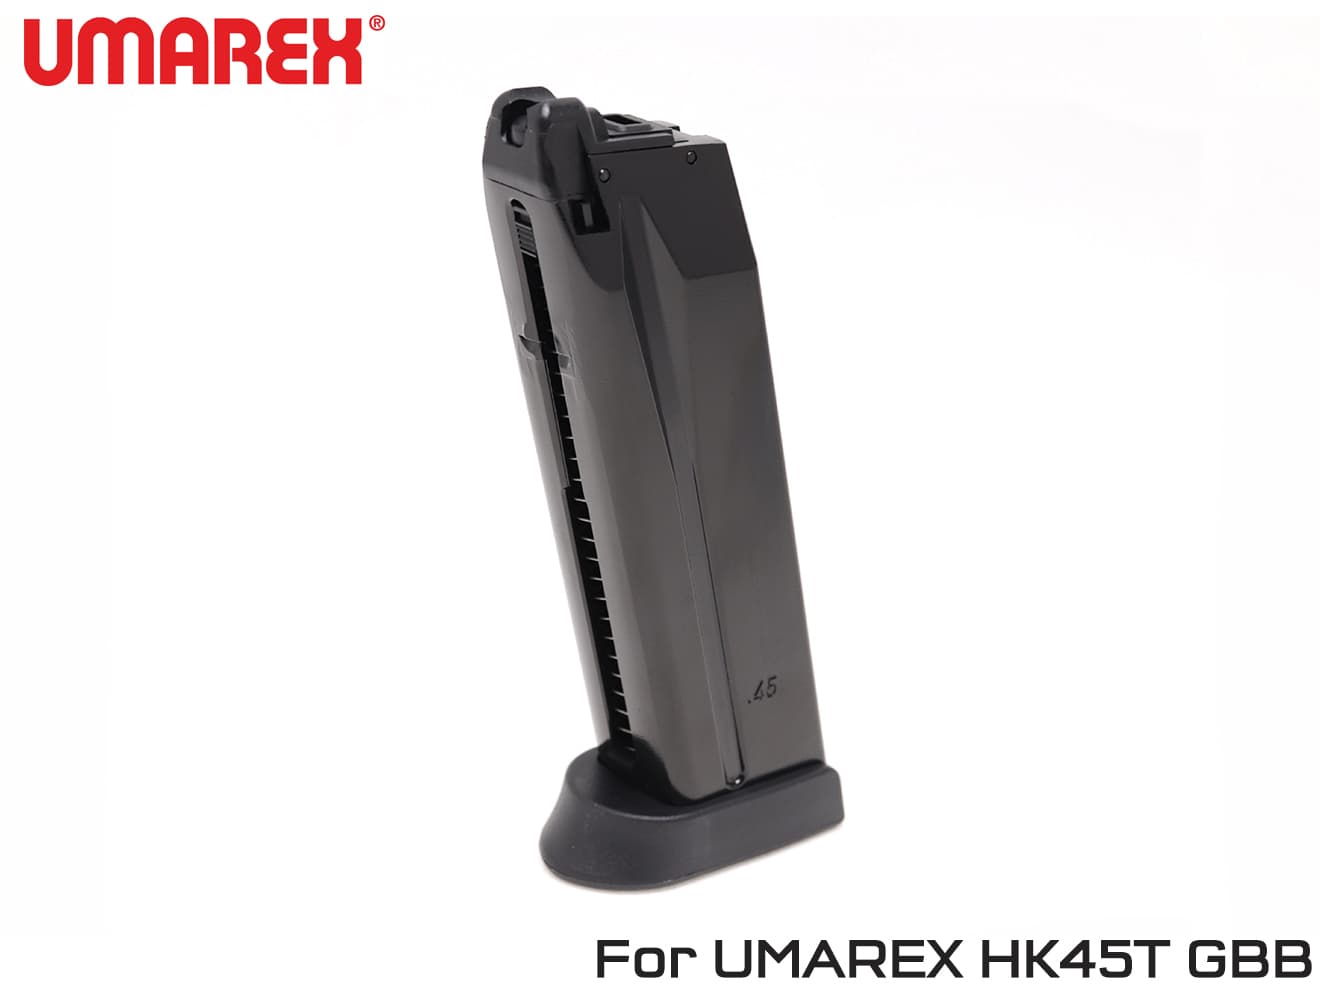 Umarex HK45T GBB 24連マガジン ブラック◆ウマレックス/ガスガン/予備マガジン/予備マグ/スペアマグ/VFC/純正品/刻印あり